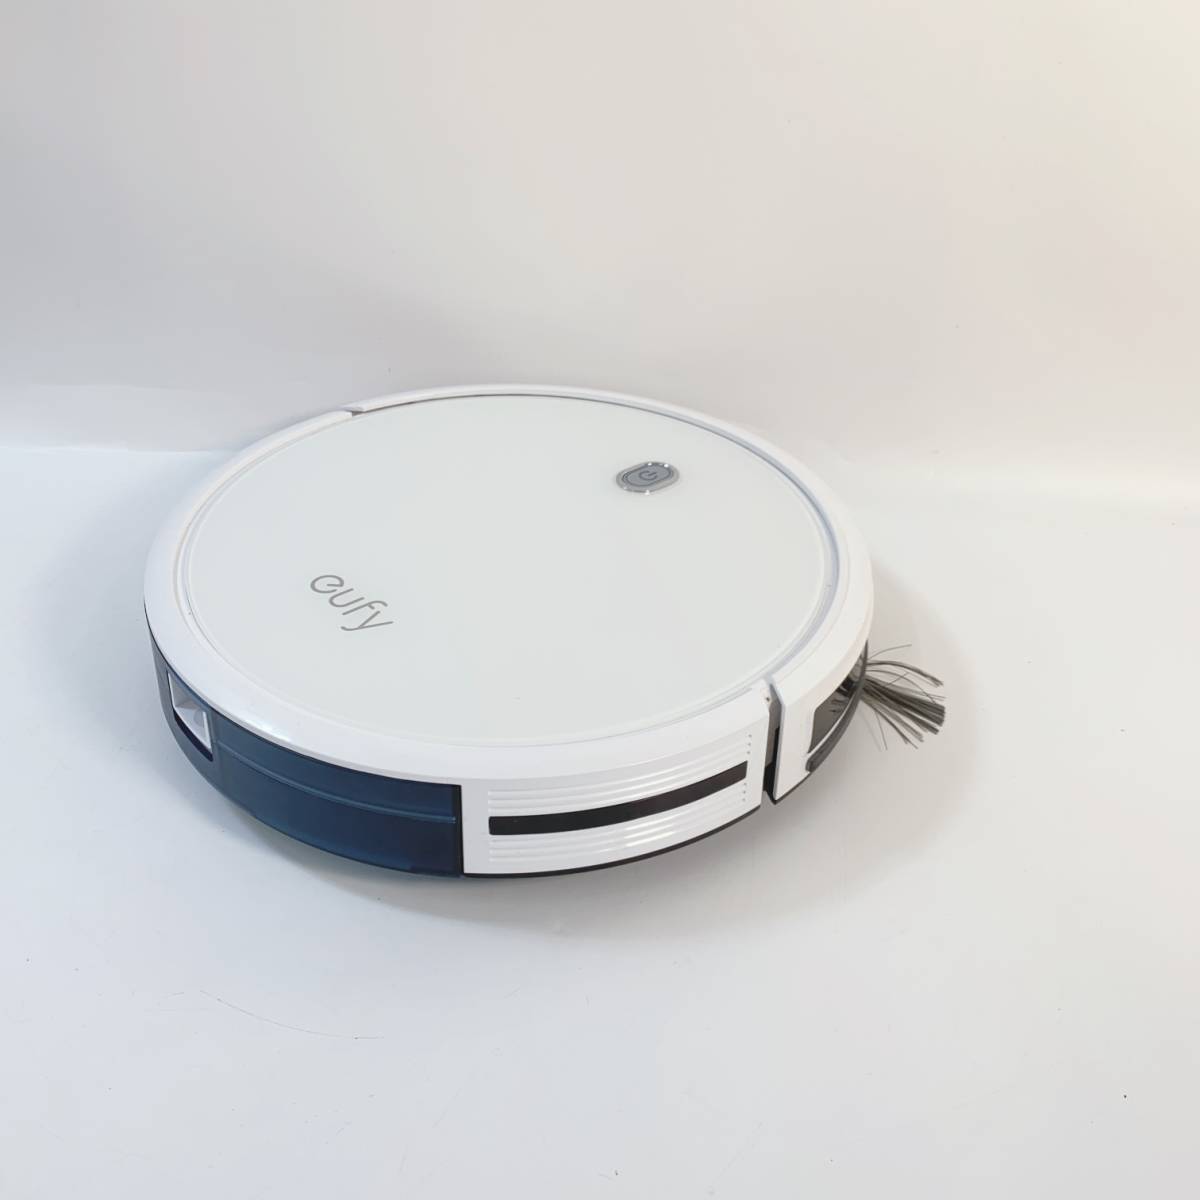 Anker Eufy RoboVac 11S robot vacuum cleaner ( white )